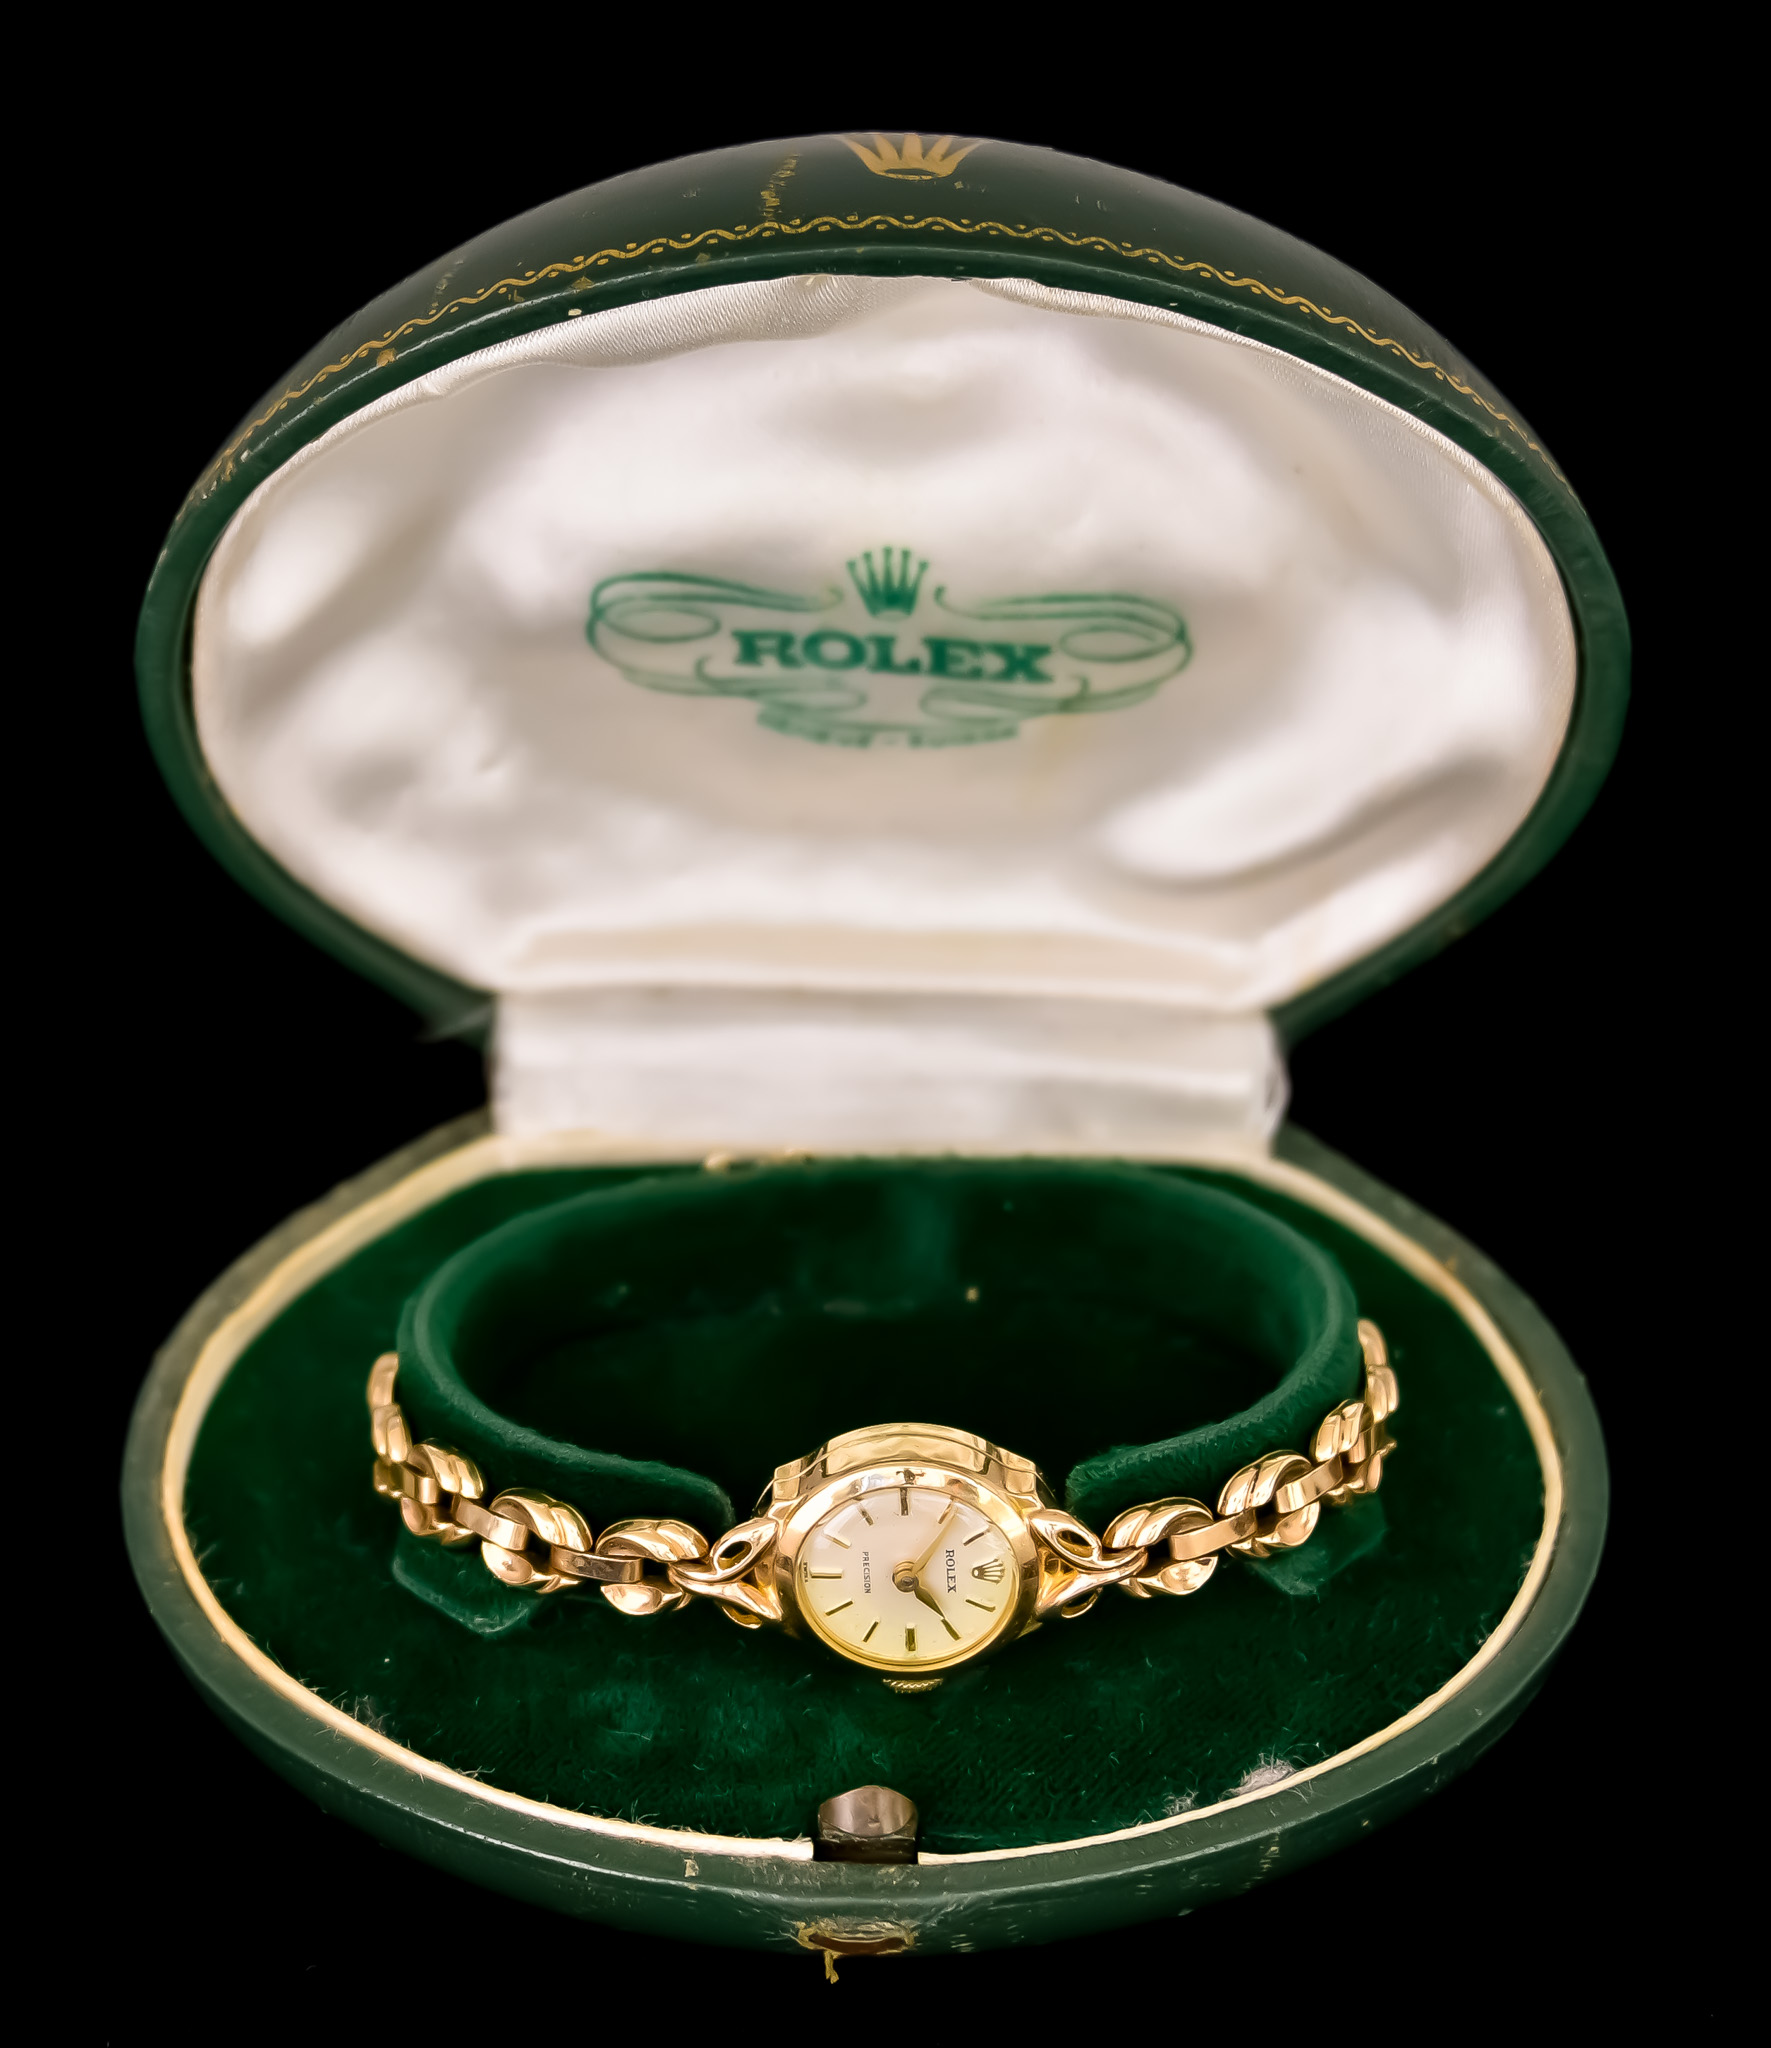 A Lady's Manual Wind Wristwatch, by Rolex, Model Precision, in 9ct gold case, 17mm diameter,